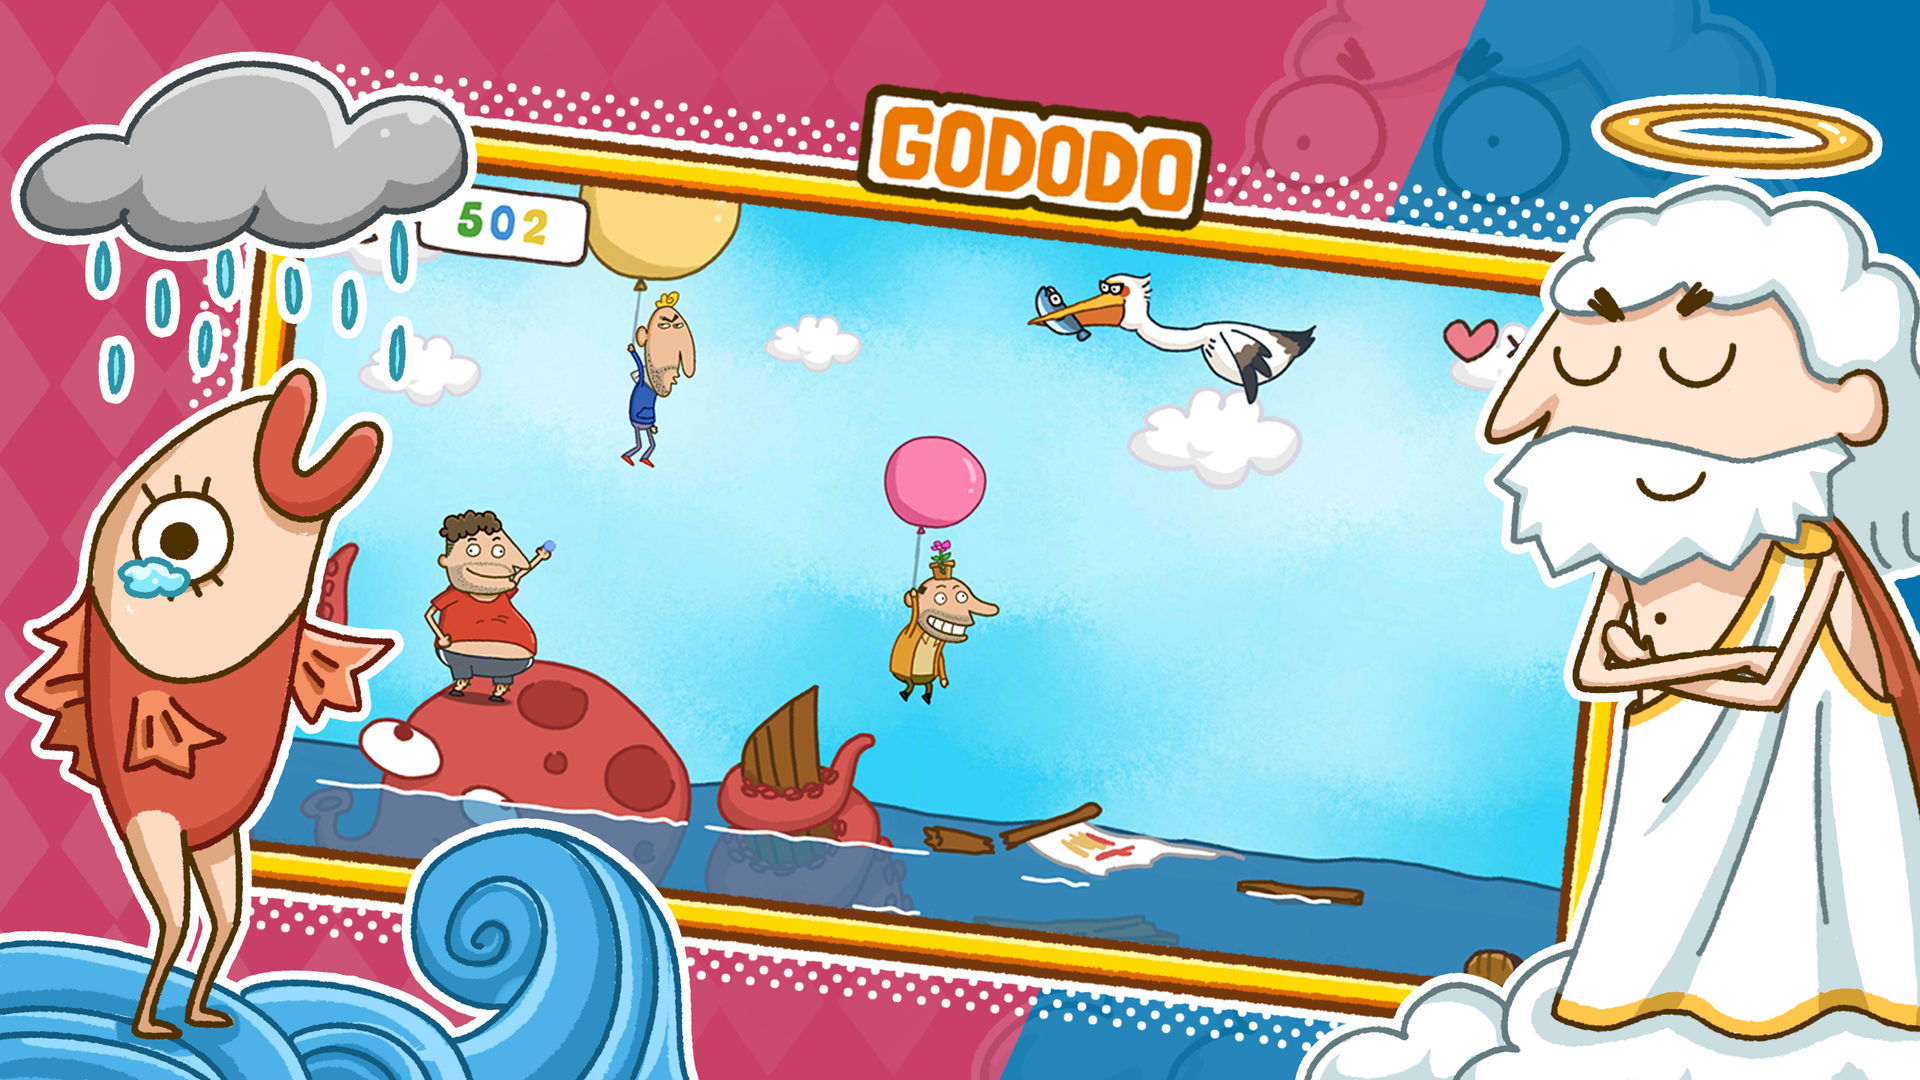 Screenshot of Gododo